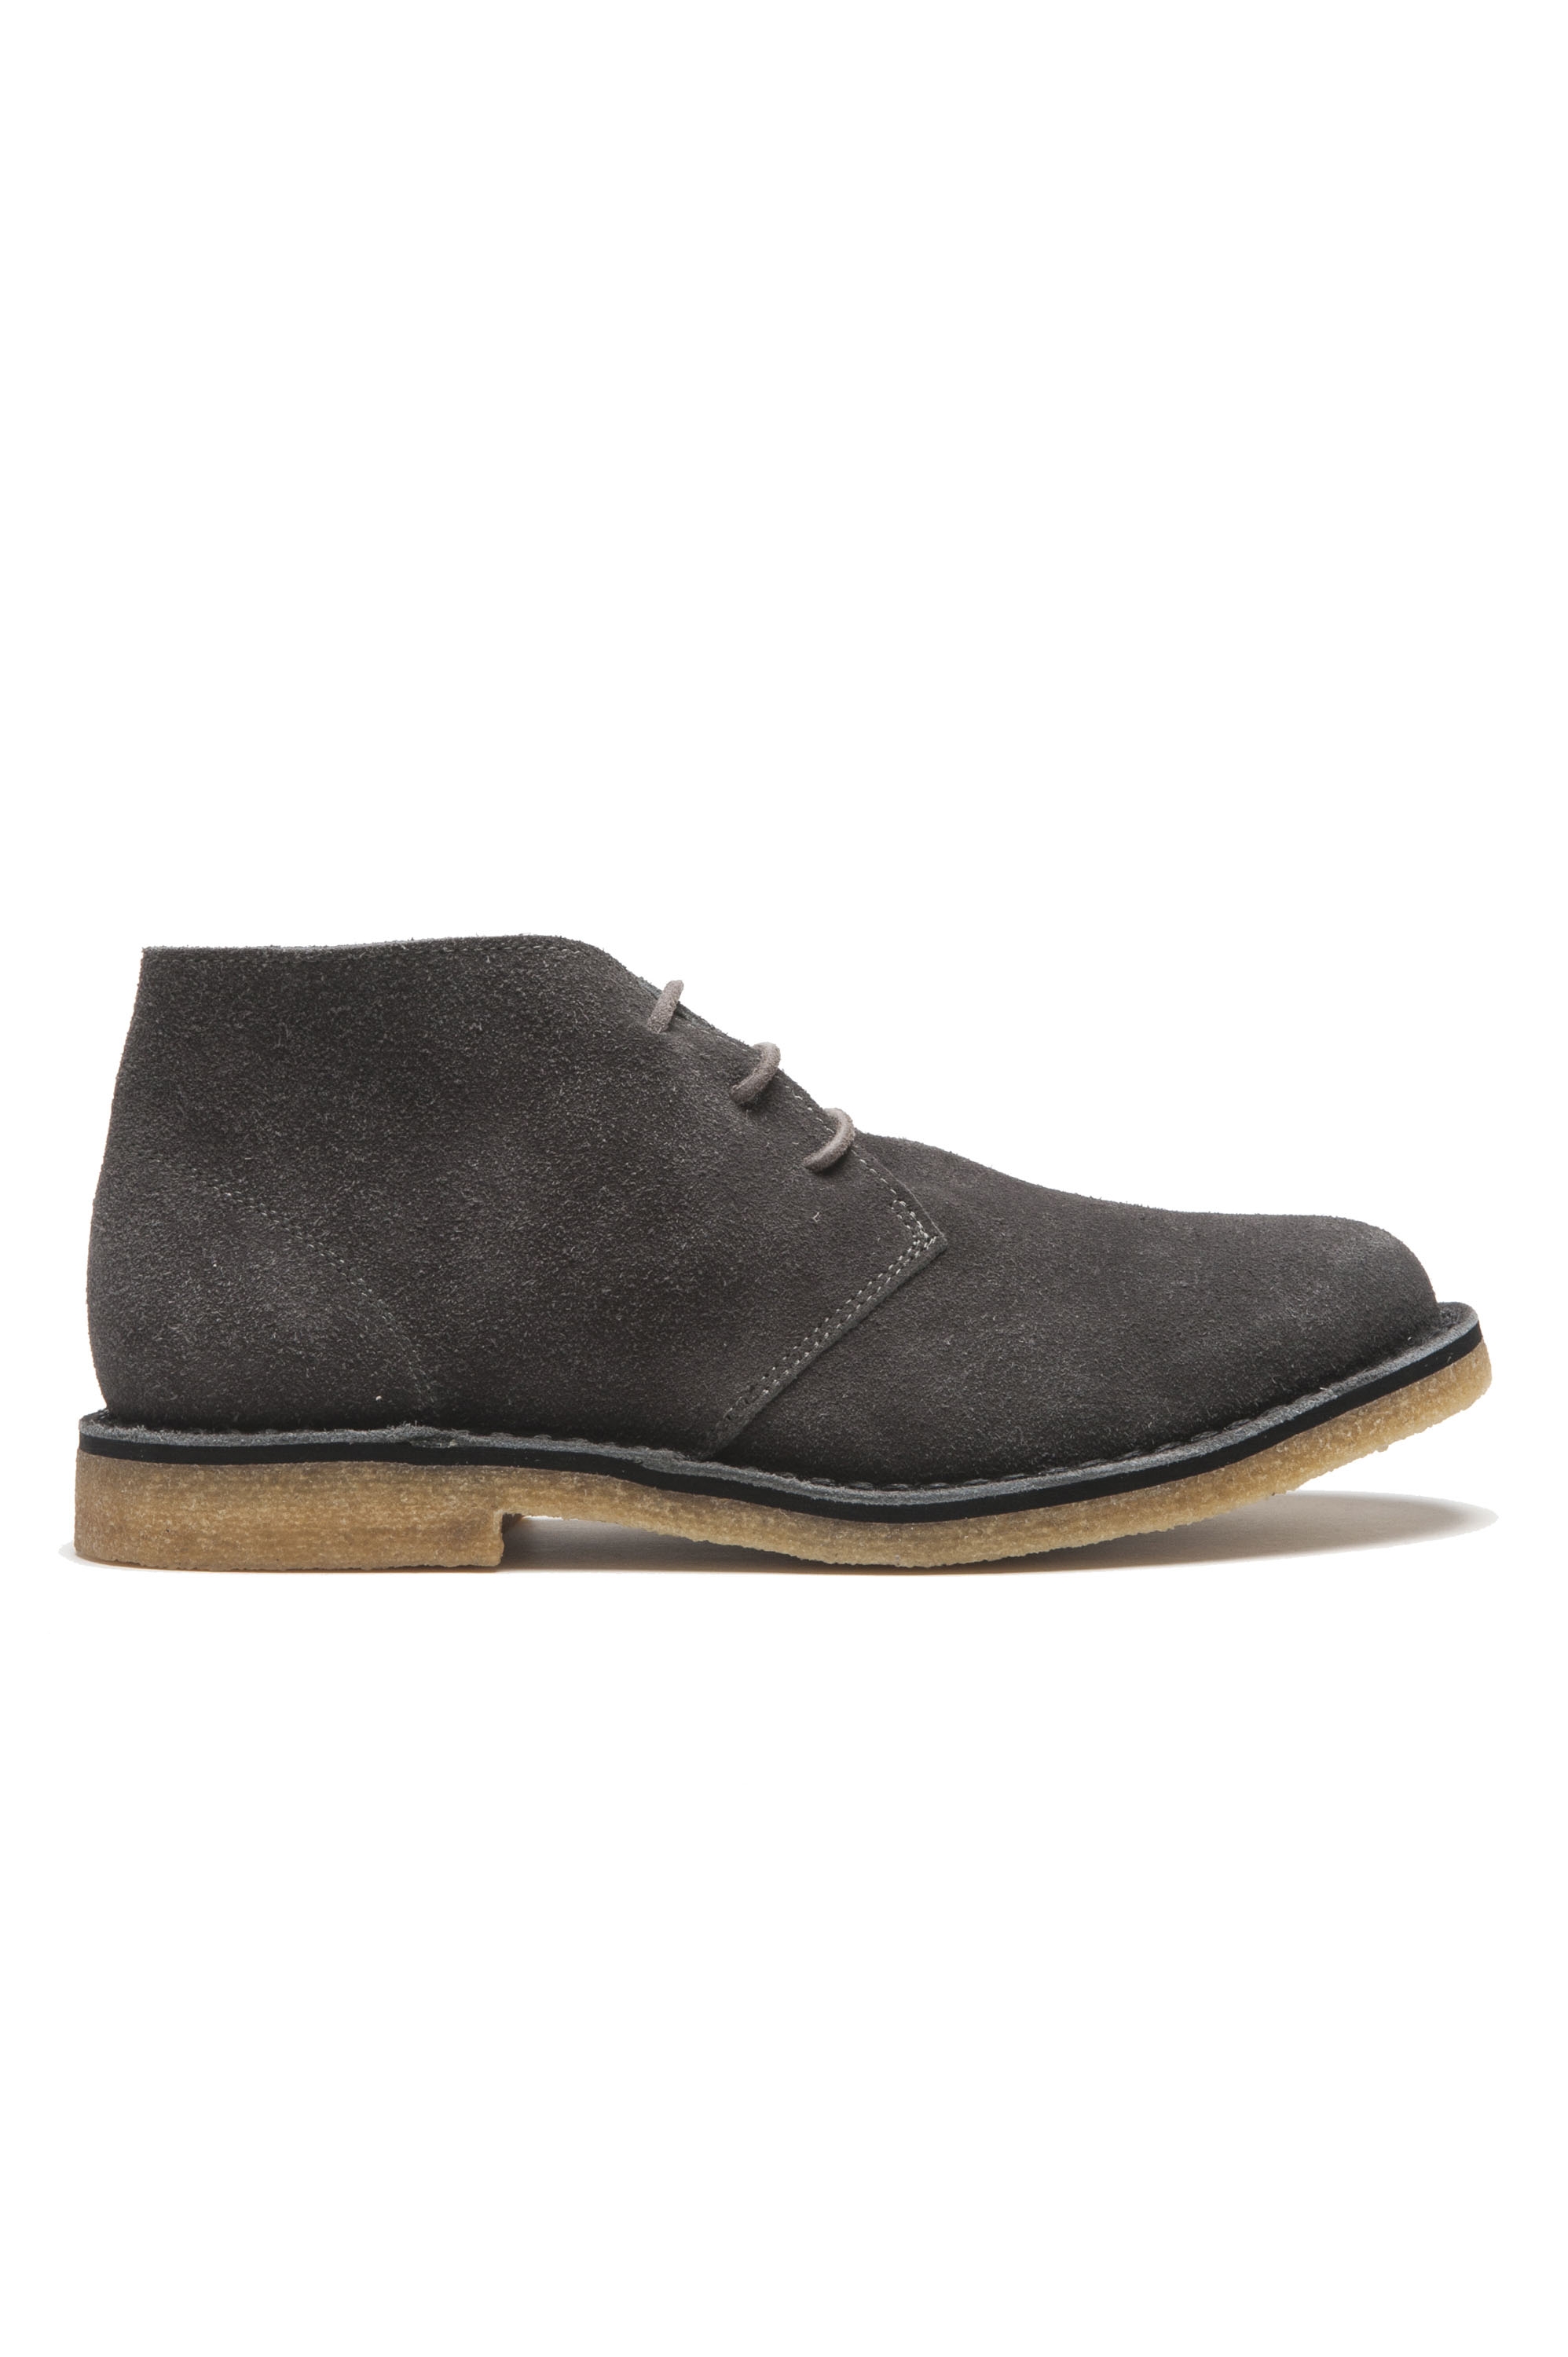 SBU 01517 Classic mid top desert boots in grey suede calfskin leather 01